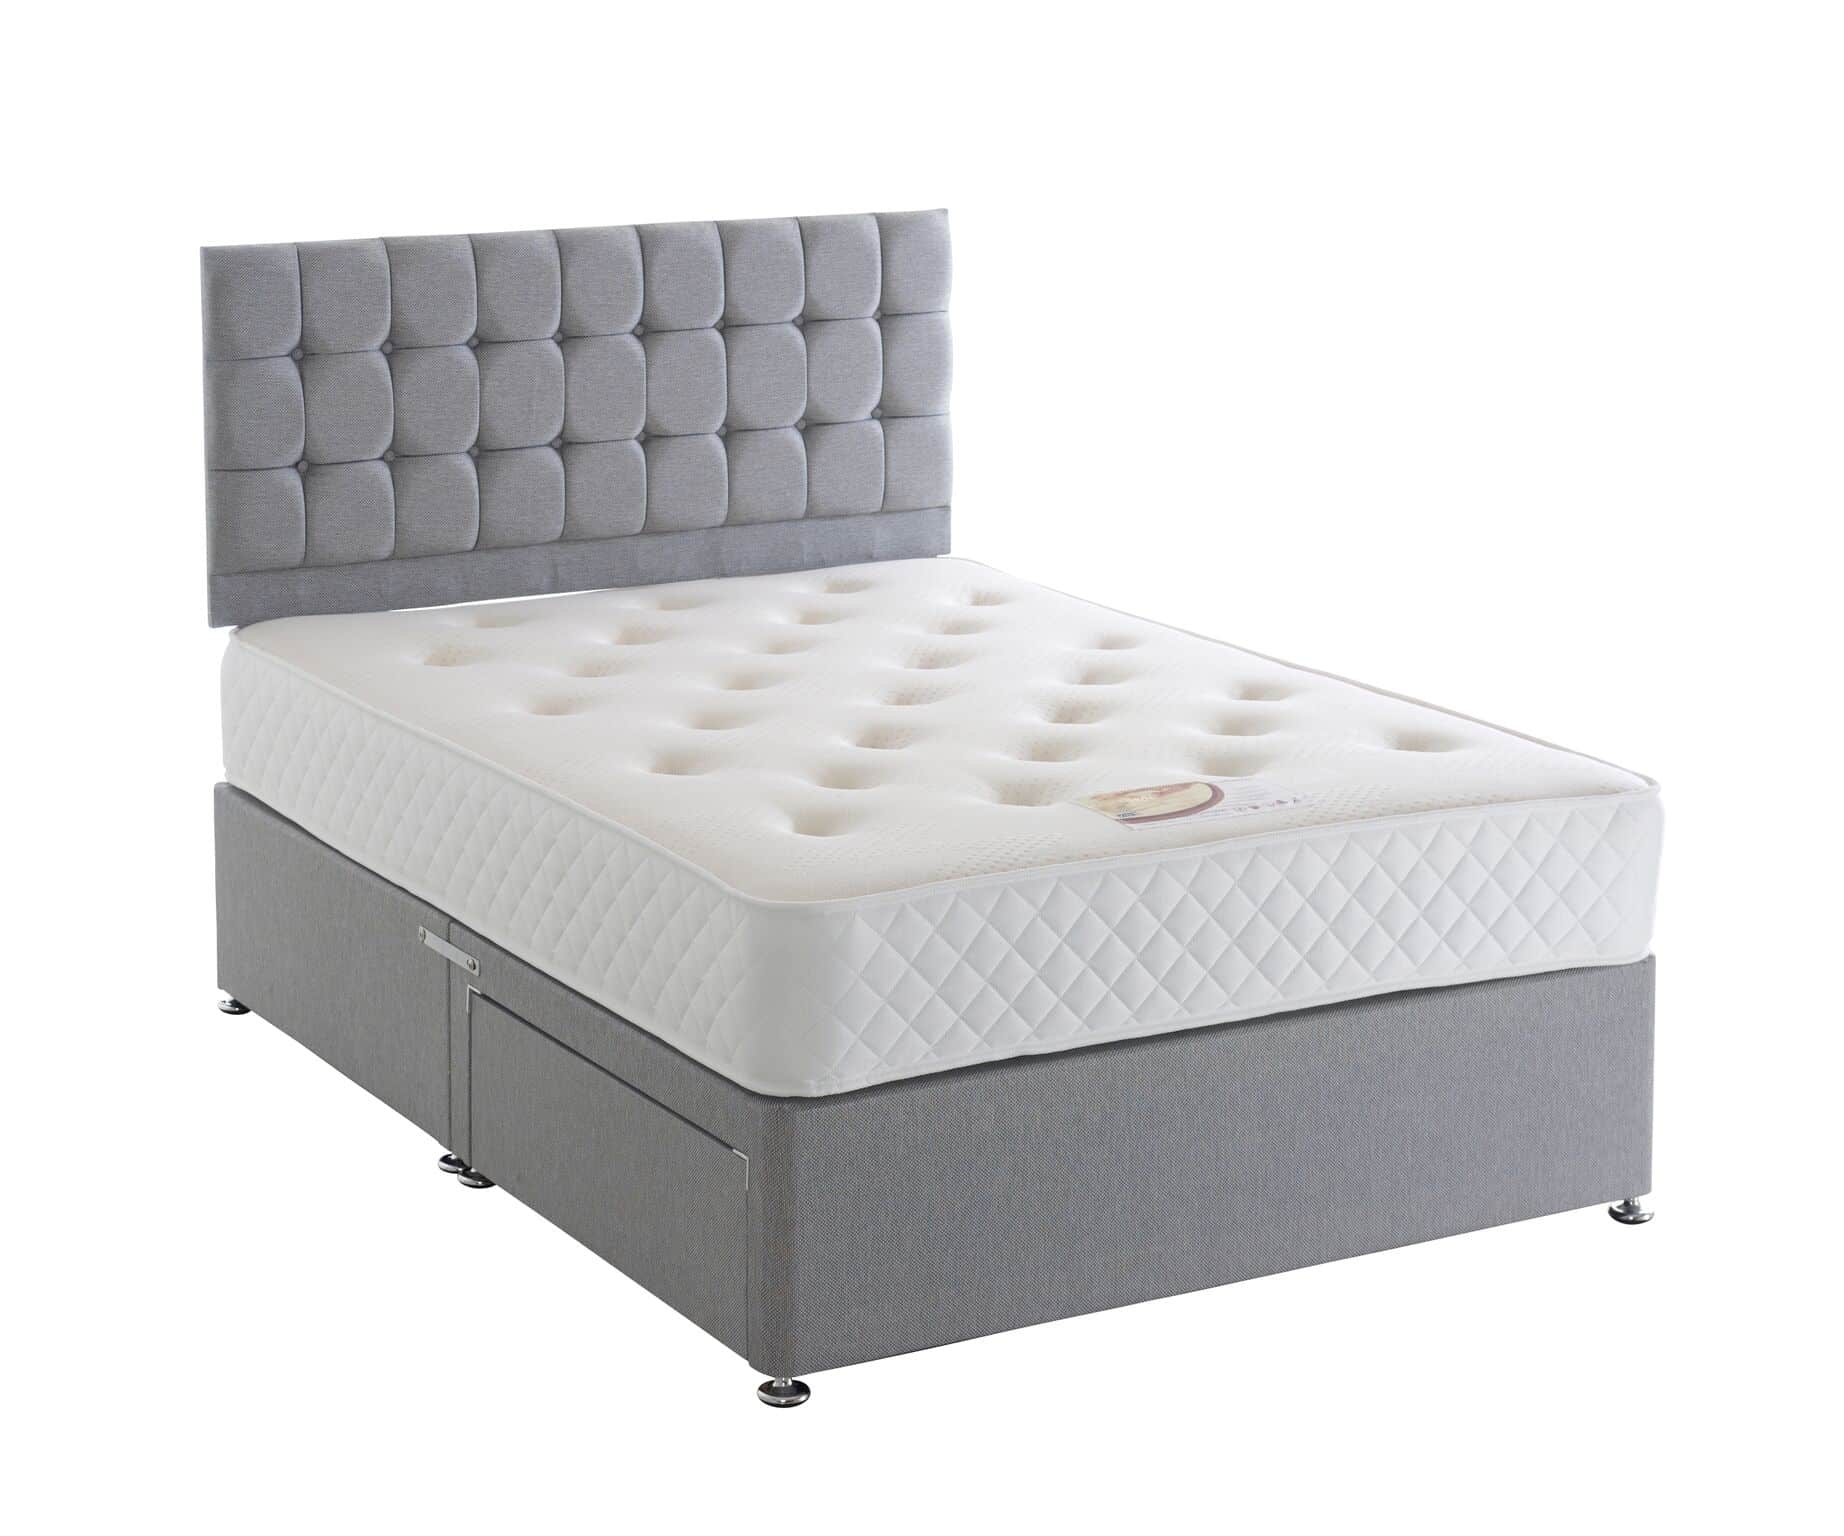 Dura Beds – Elastacoil Divan Bed Set – Super King – Divan Bed Base With Elastacoil Medium Firmness Mattress